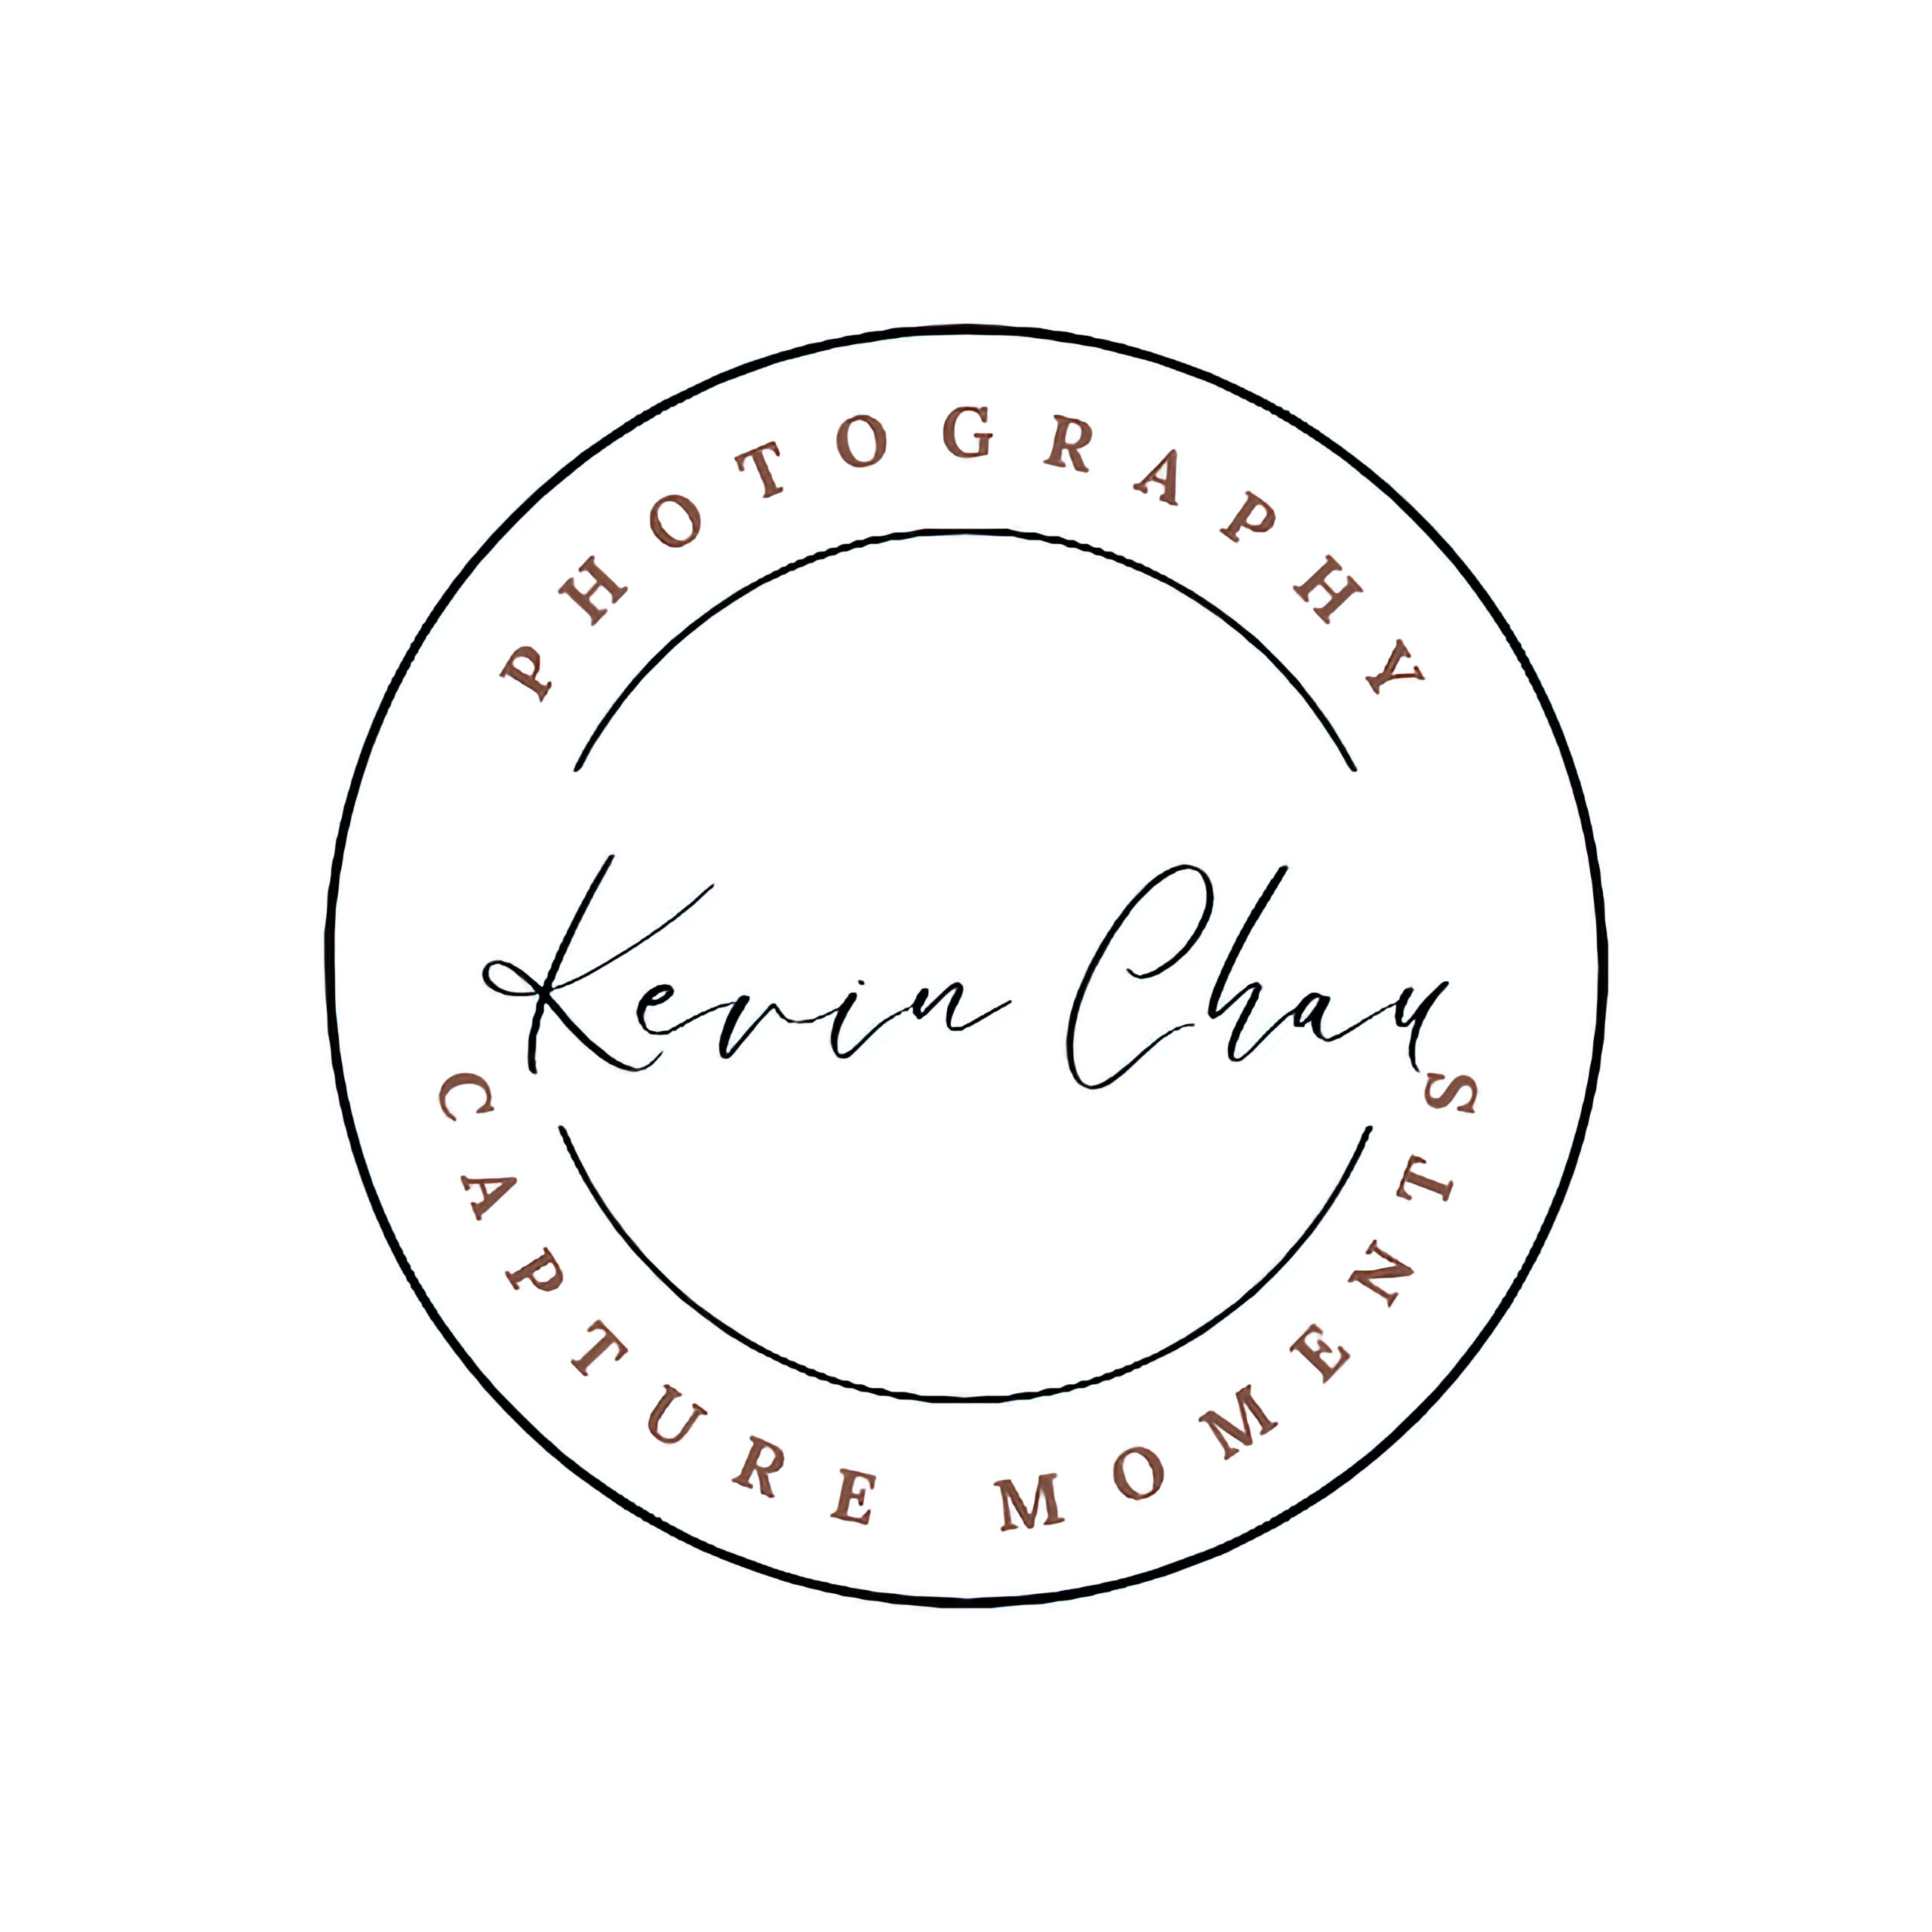 Kevin Chau photography log 2